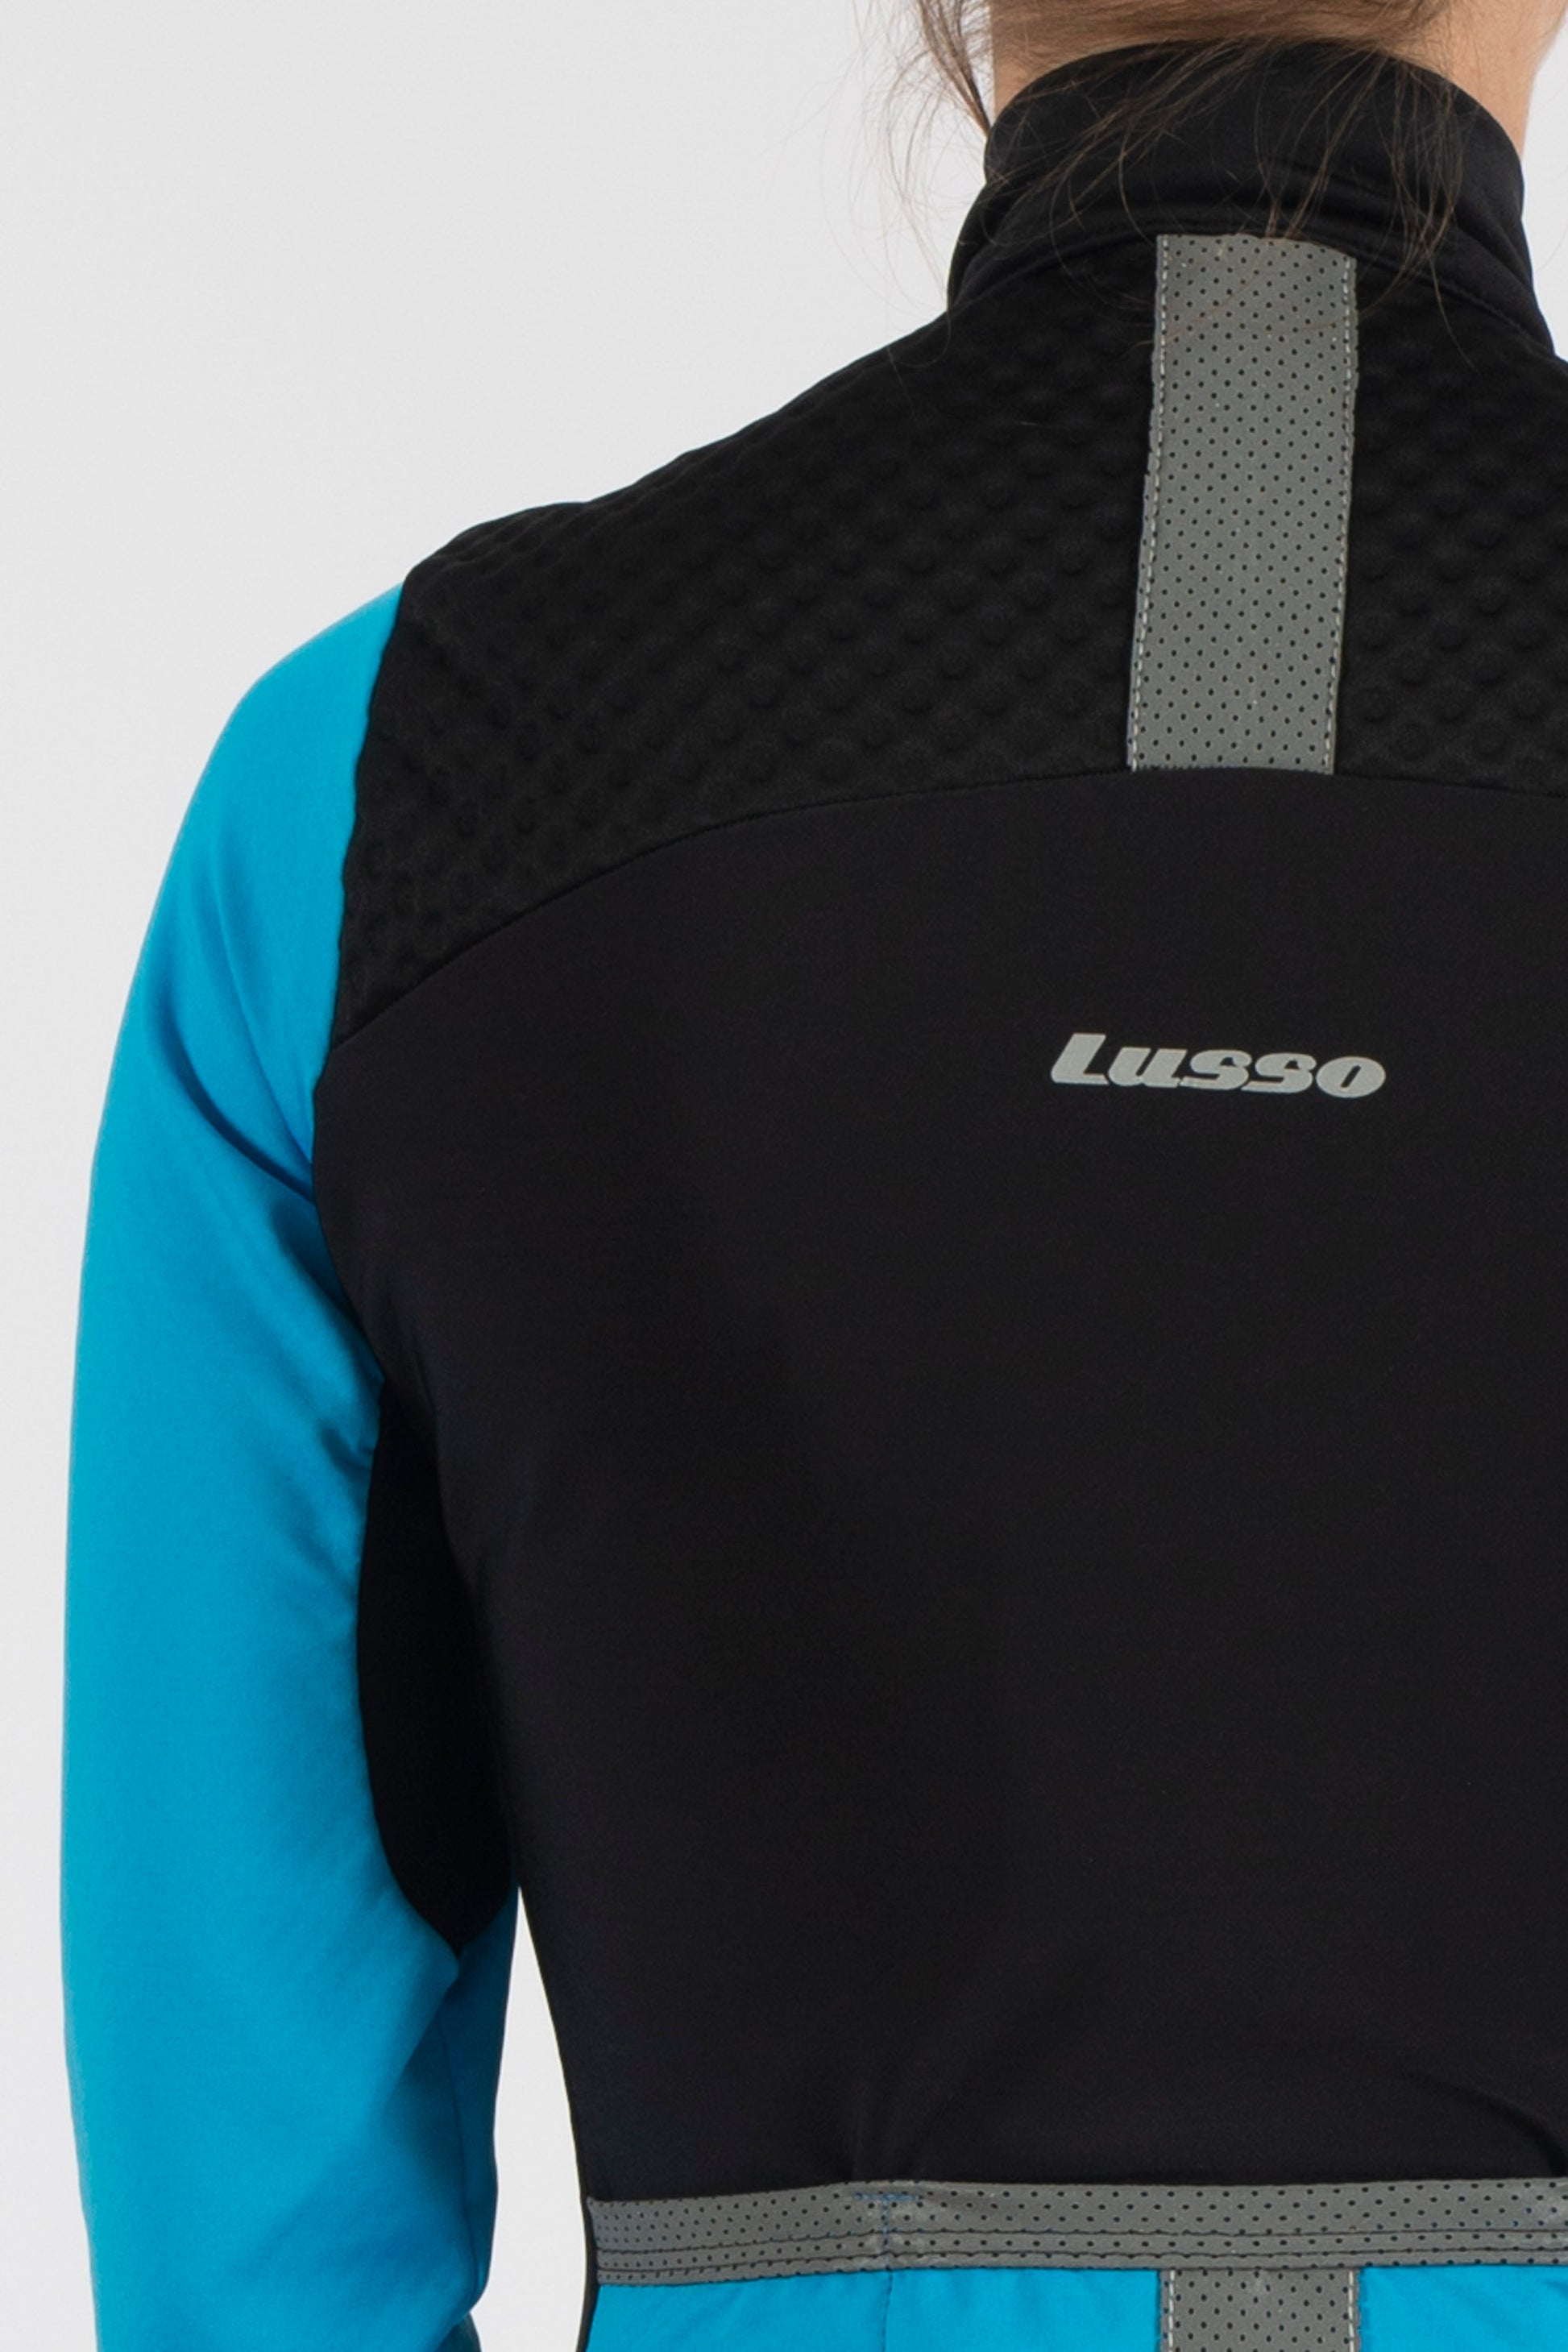 Women's Aqua Pro Extreme Jacket - Blue - Lusso Cycle Wear